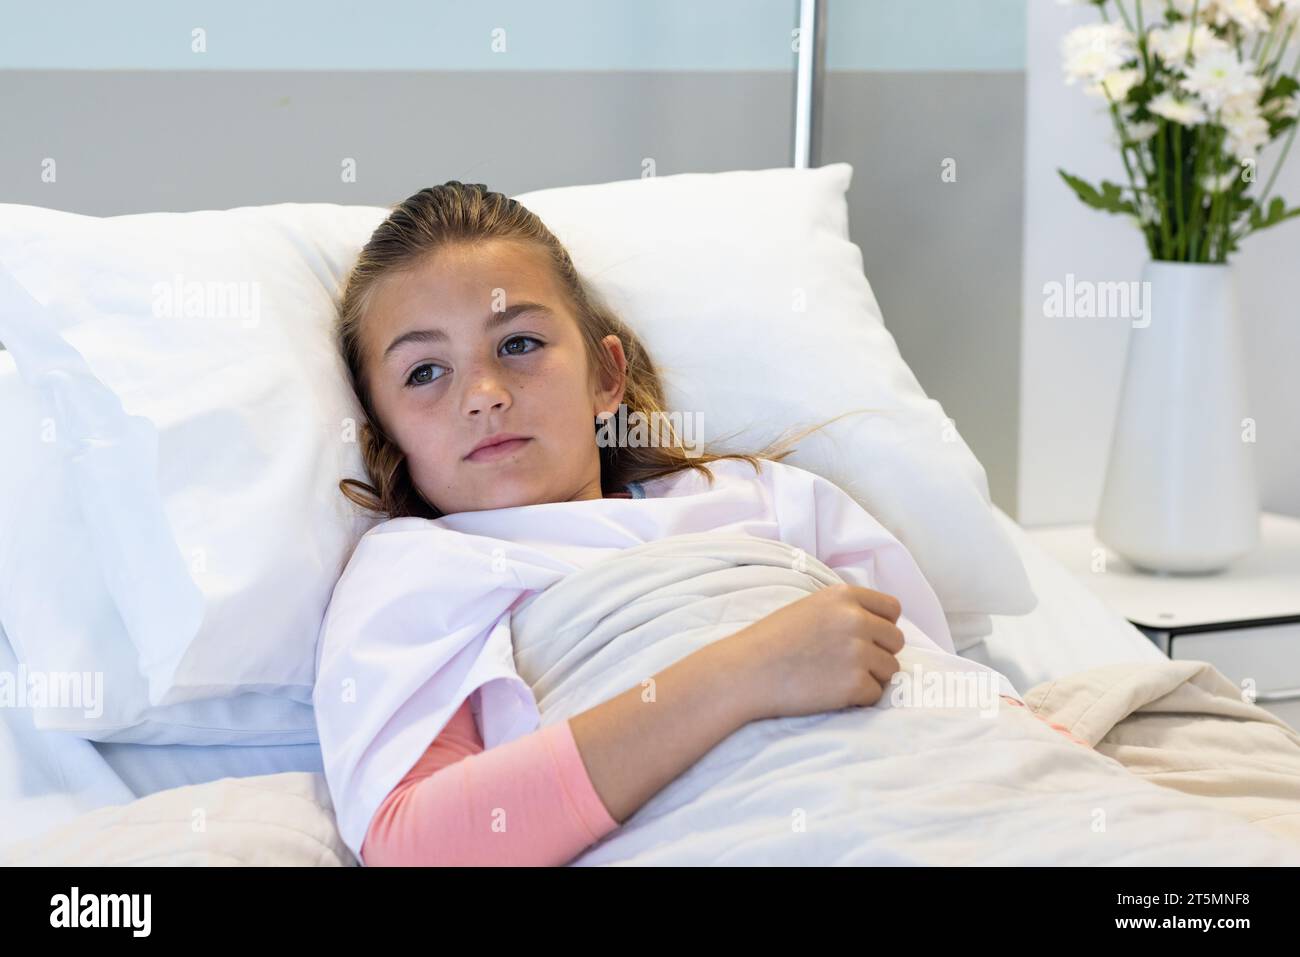 Sick caucasian girl patient lying in hospital bed looking away Stock Photo